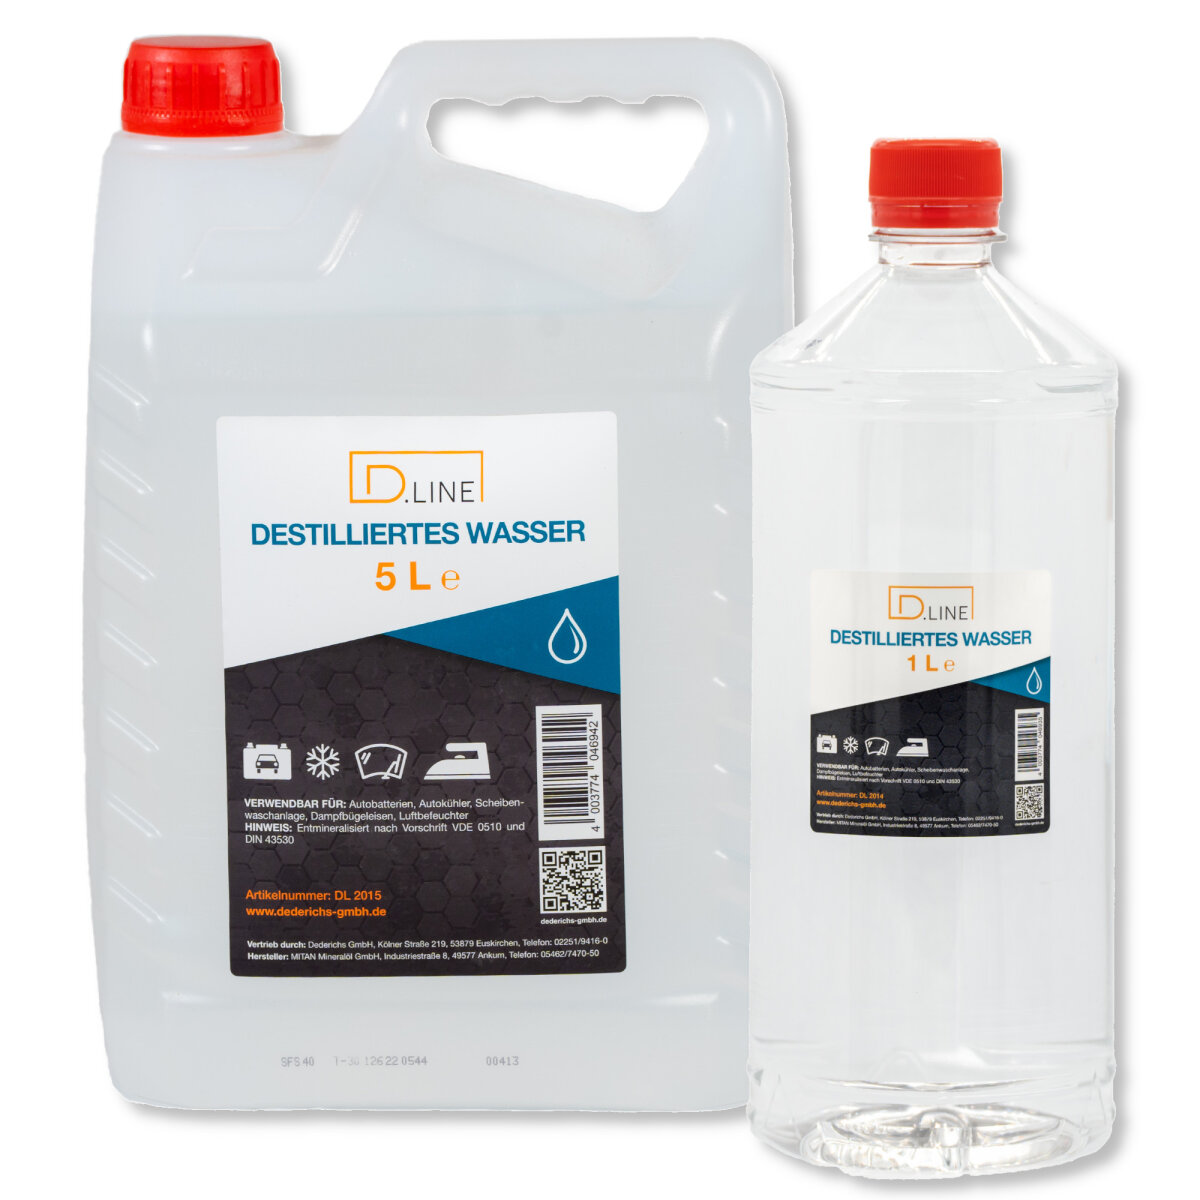 https://dederichs.shop/media/image/product/223966/lg/dline-destilliertes-wasser-1-oder-5-liter-dl-201.jpg